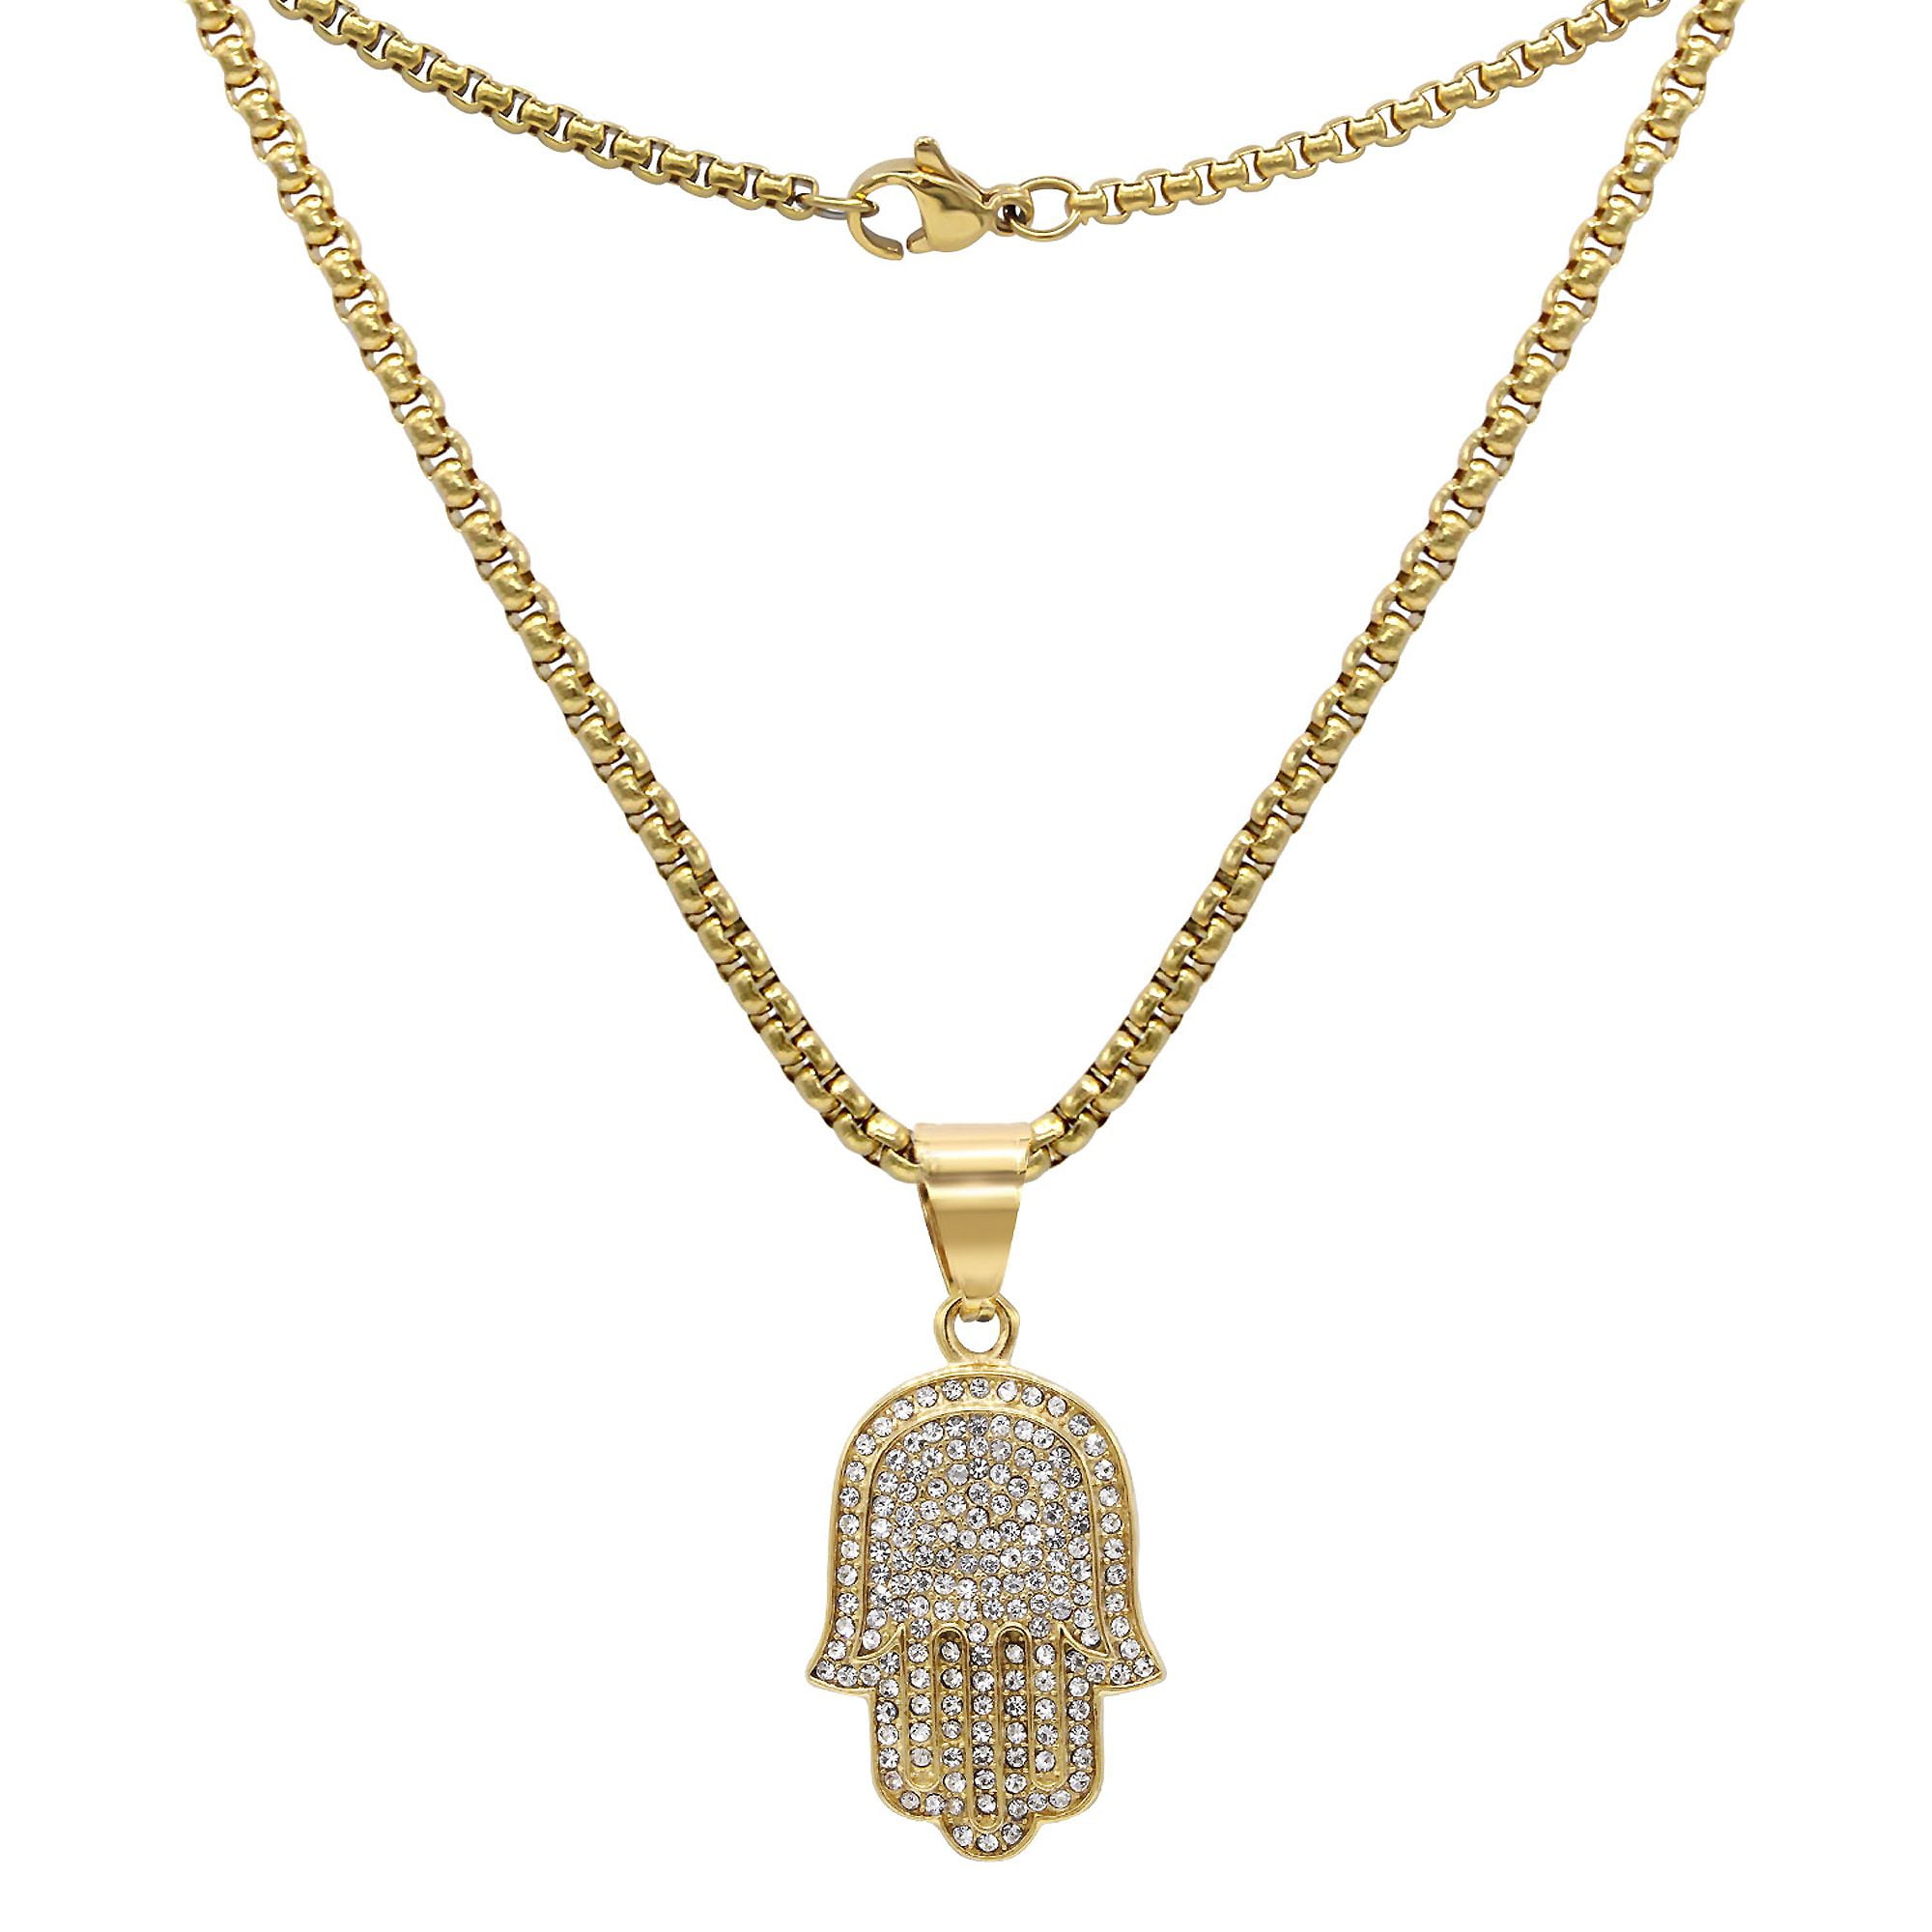 Elegant 14k Rose Gold CZ with Genuine Garnet Center Stone Chic Hamsa Pendant Necklace